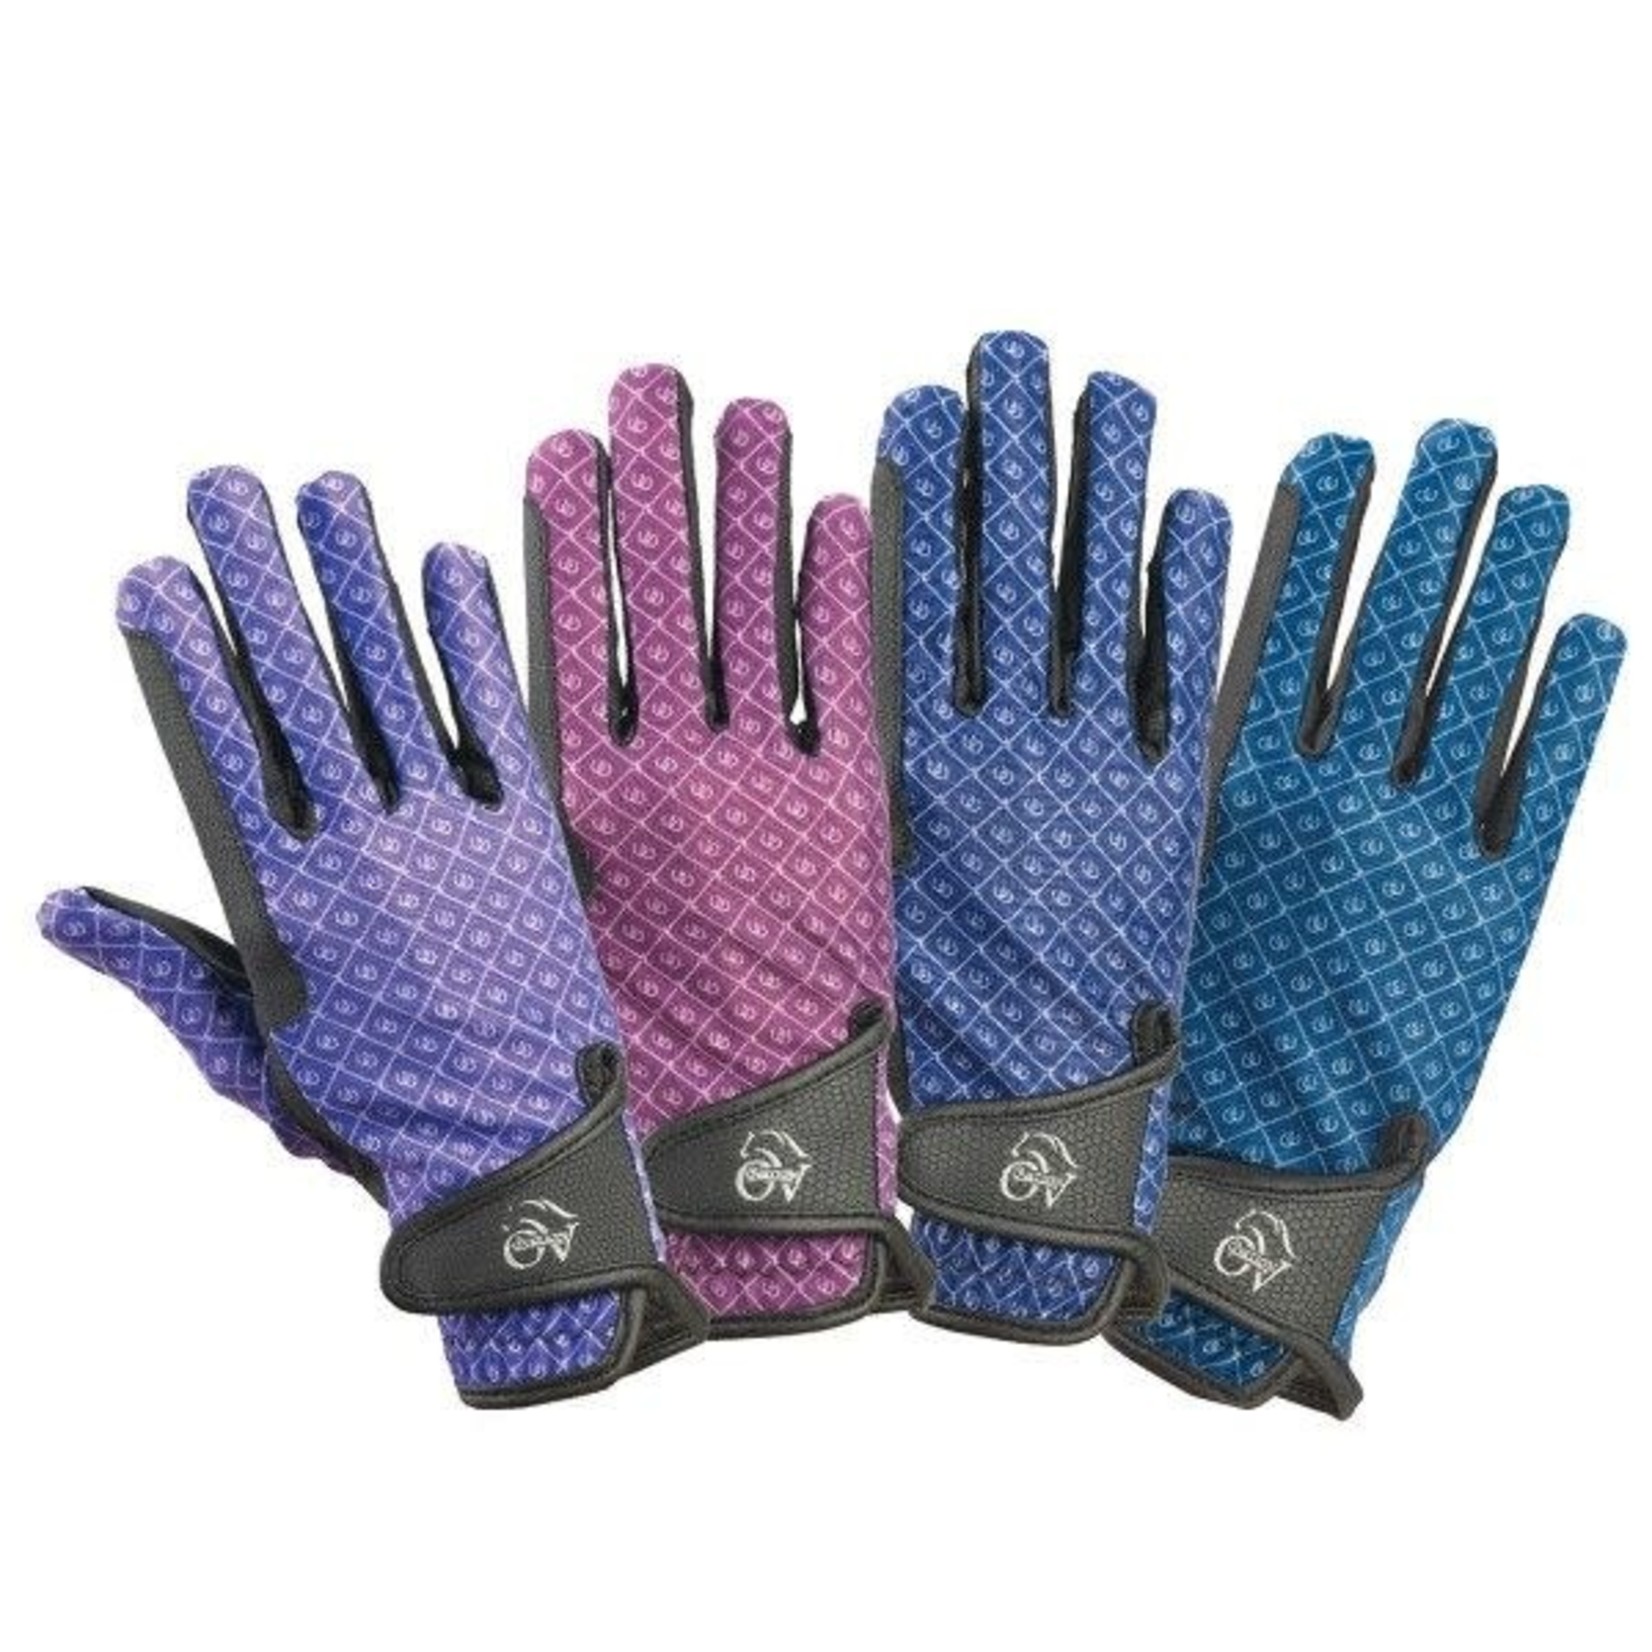 Ovation Ovation Cool Rider Gloves